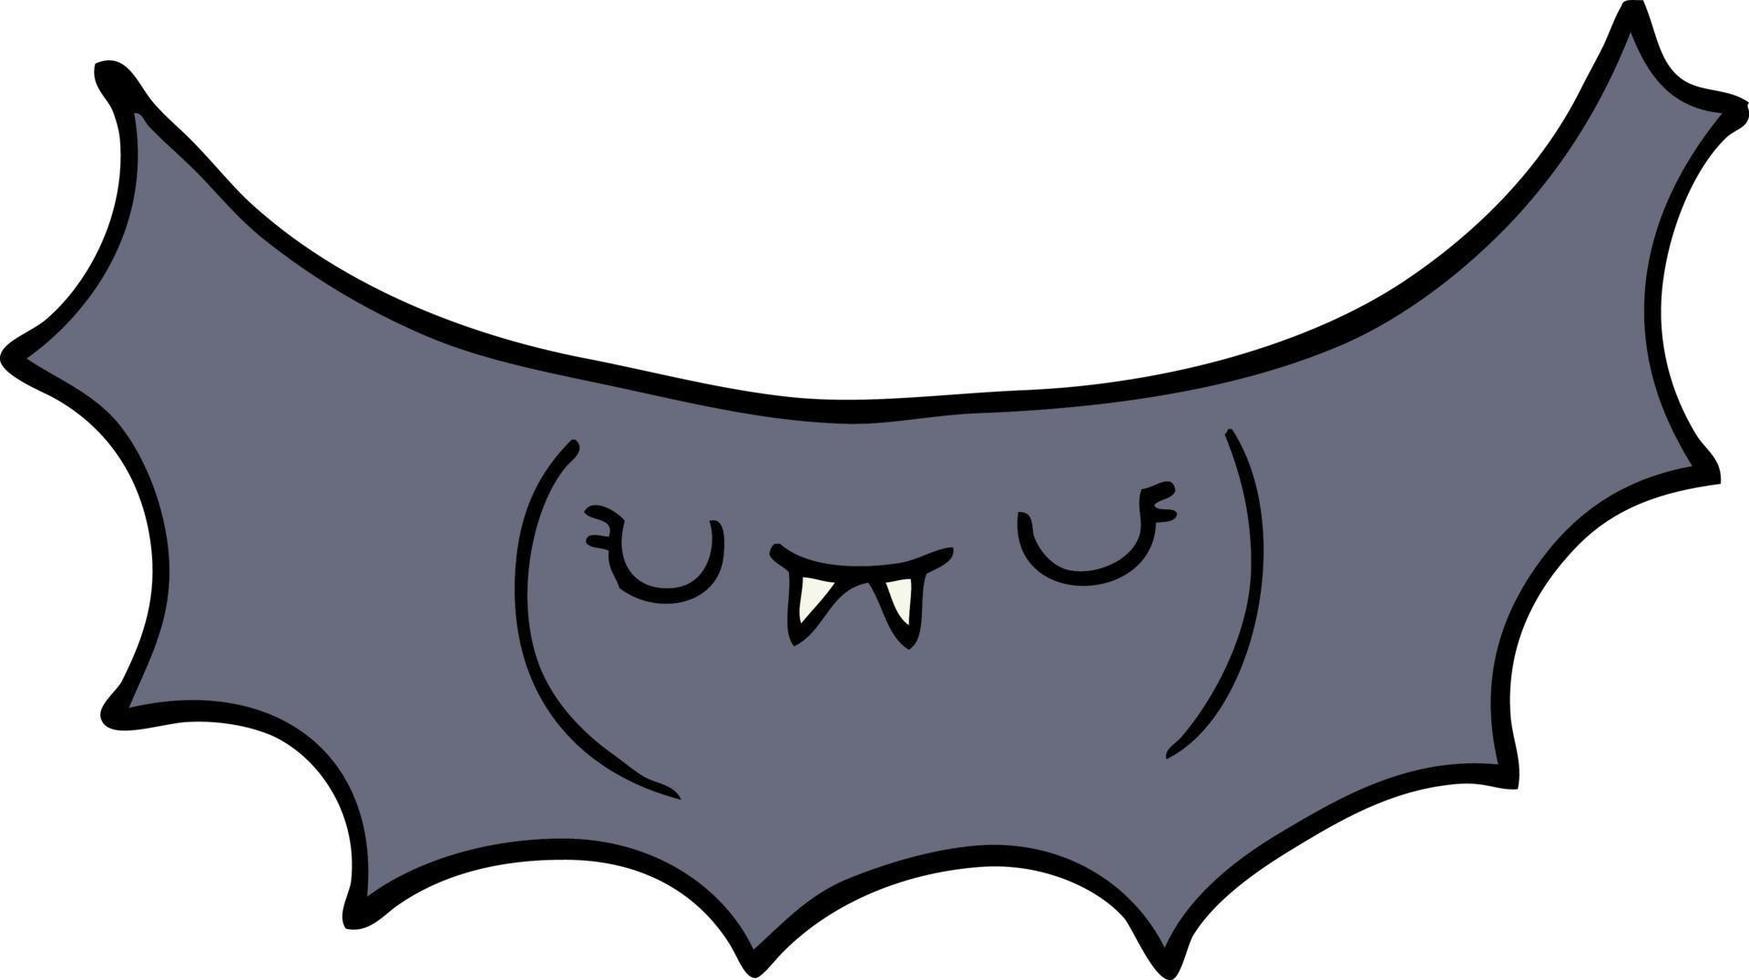 morcego vampiro dos desenhos animados vetor